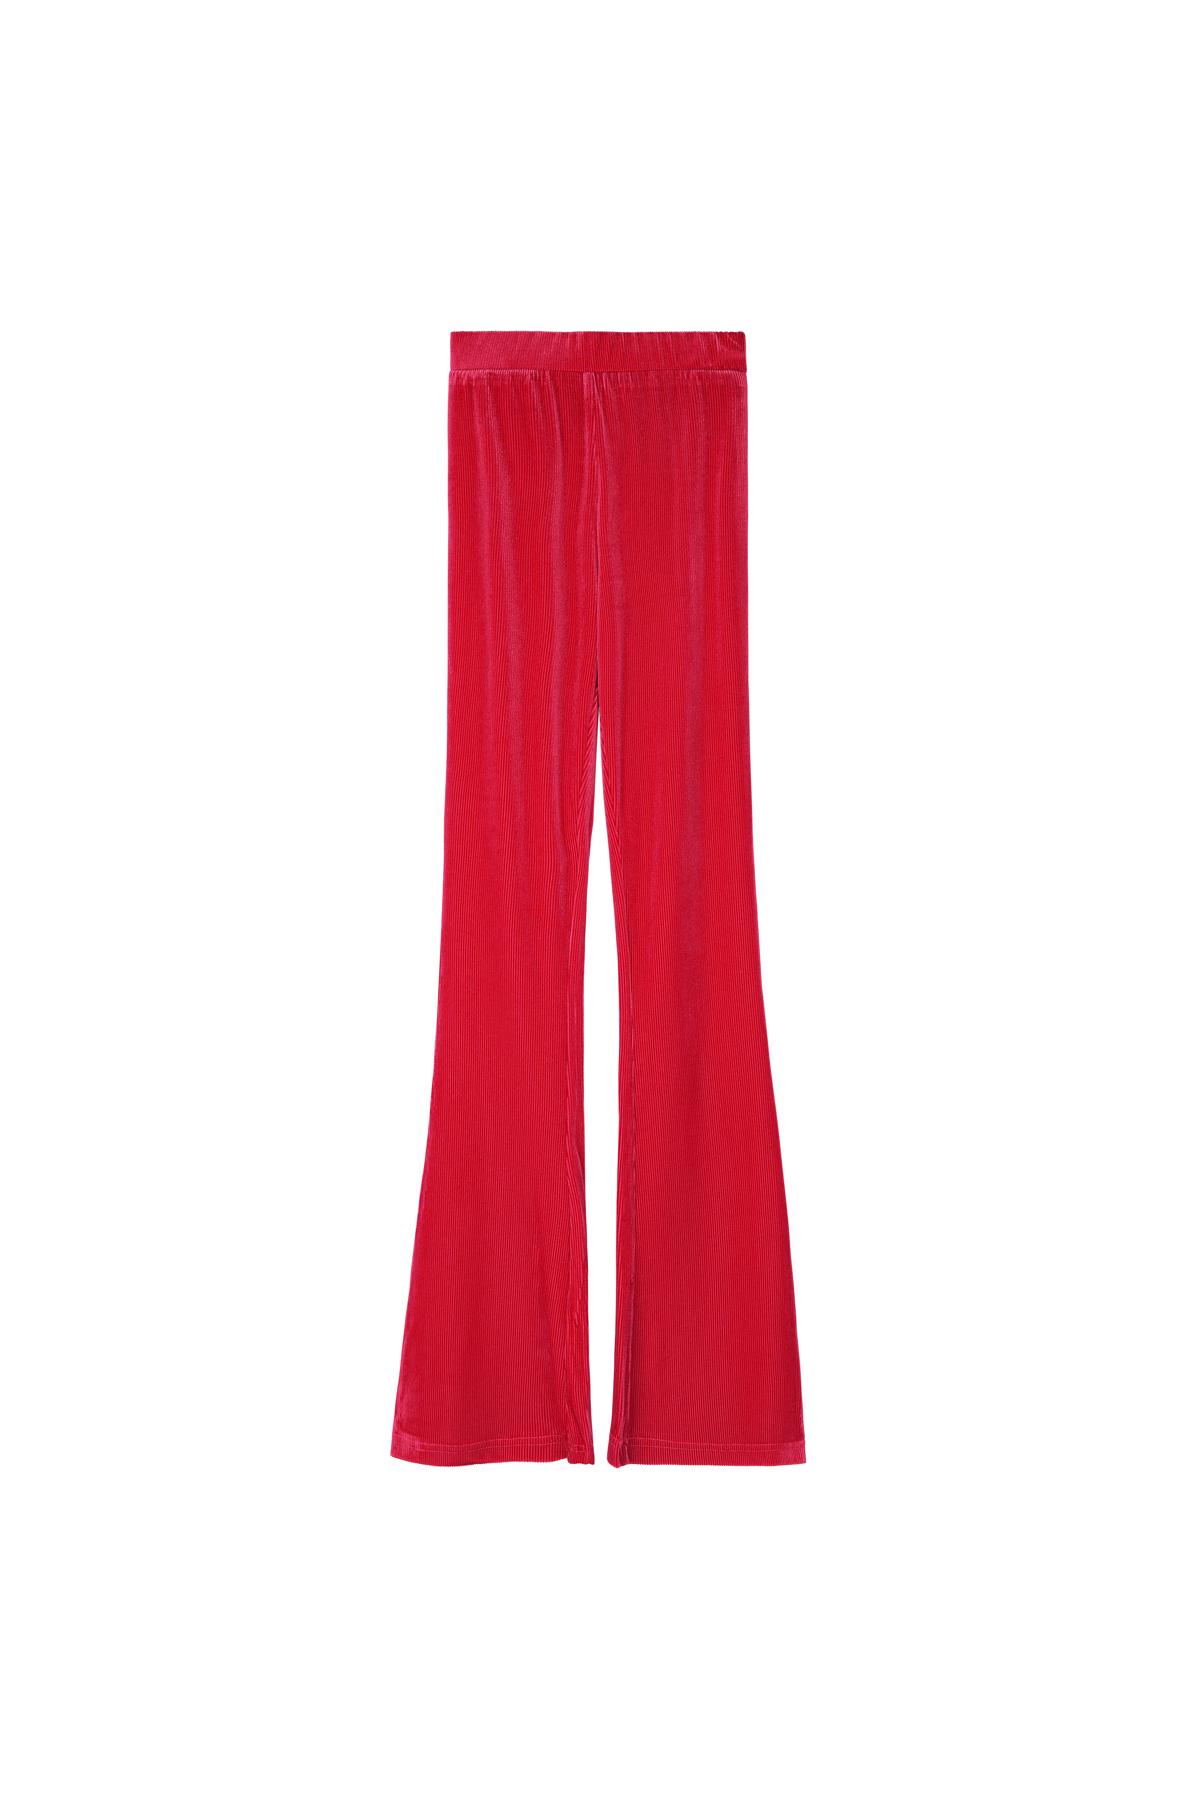 Pantalones Century Rojo L h5 